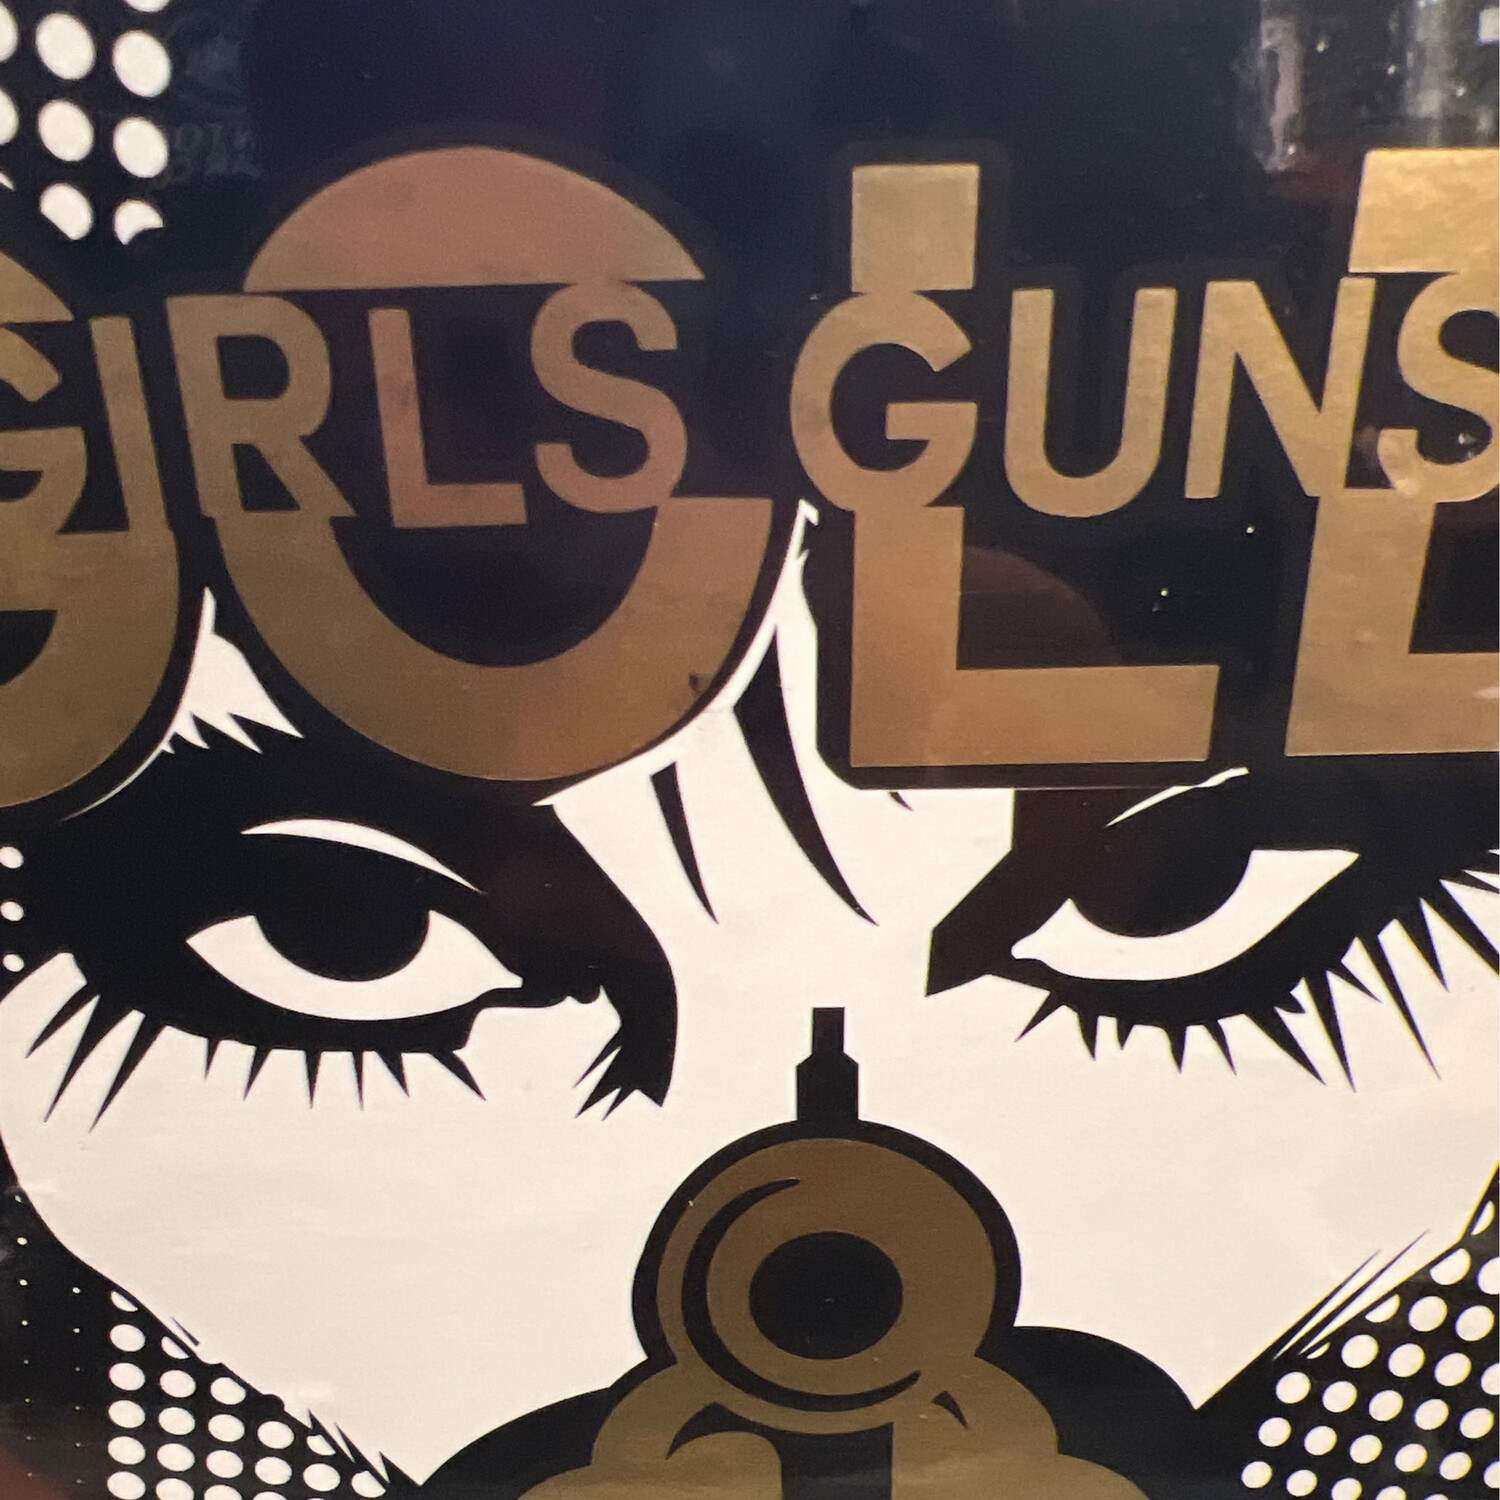 Caldwell - Girls Guns Gold Lancero 38x7.25